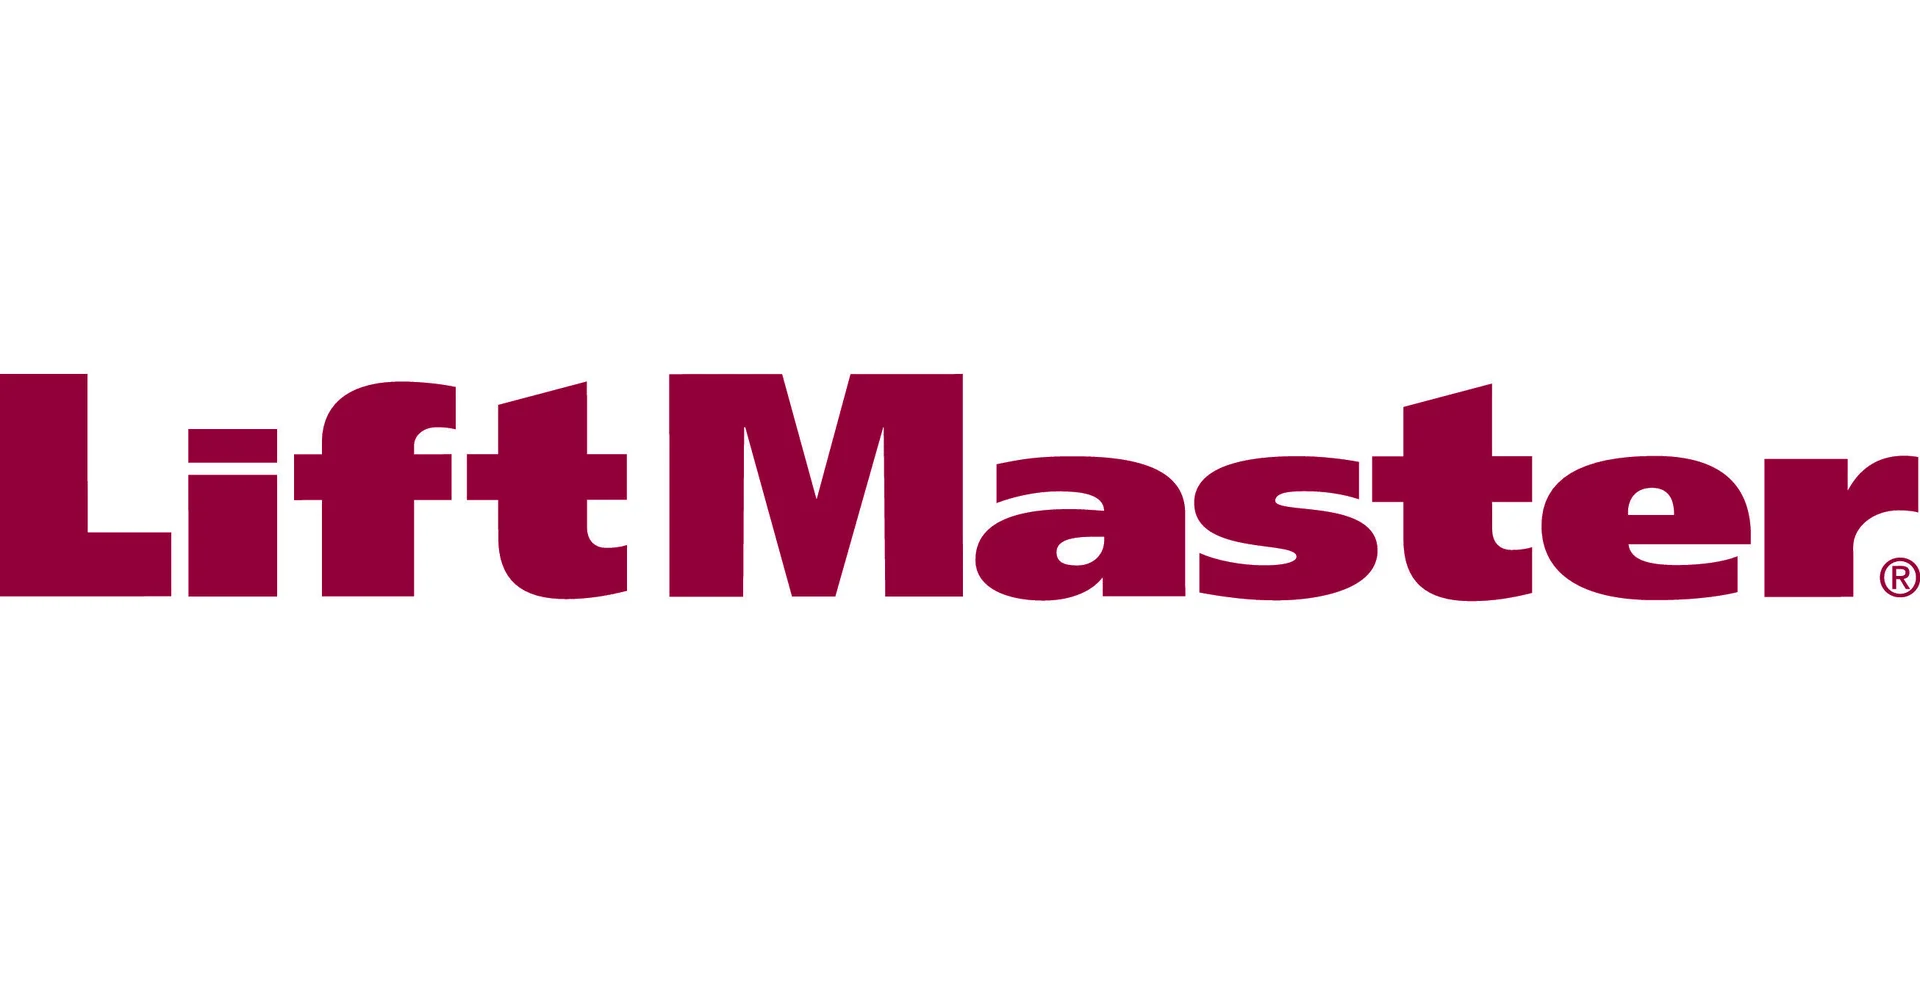 Liftmaster logo